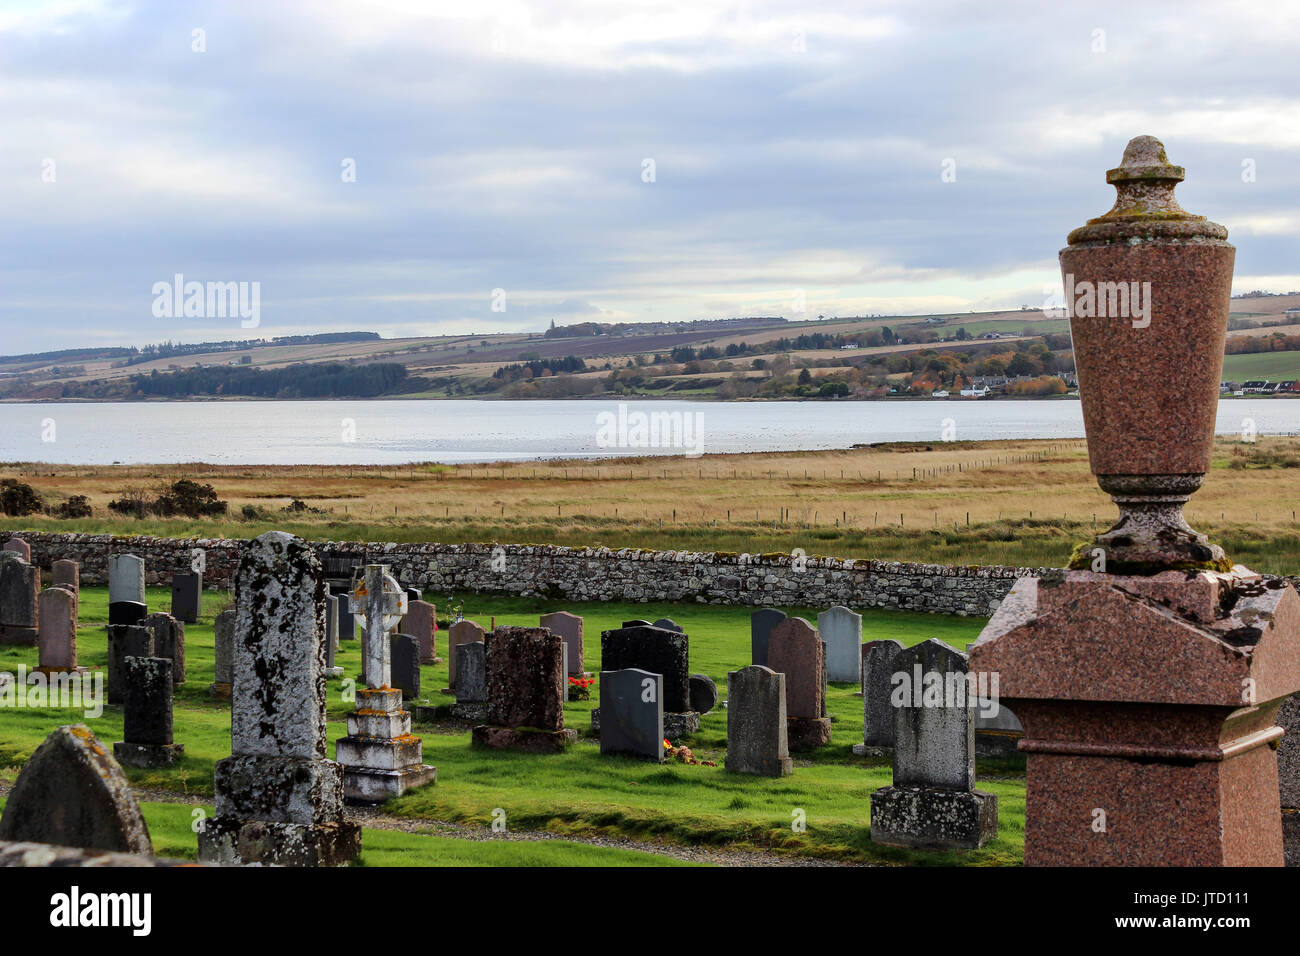 Scotland, Highlands, Graveyard, Cemetery, Church Grounds, Graves, Burial Ground, Gravestones, Autumn, Headstones, Gravestones, Countryside, Rural Stock Photo